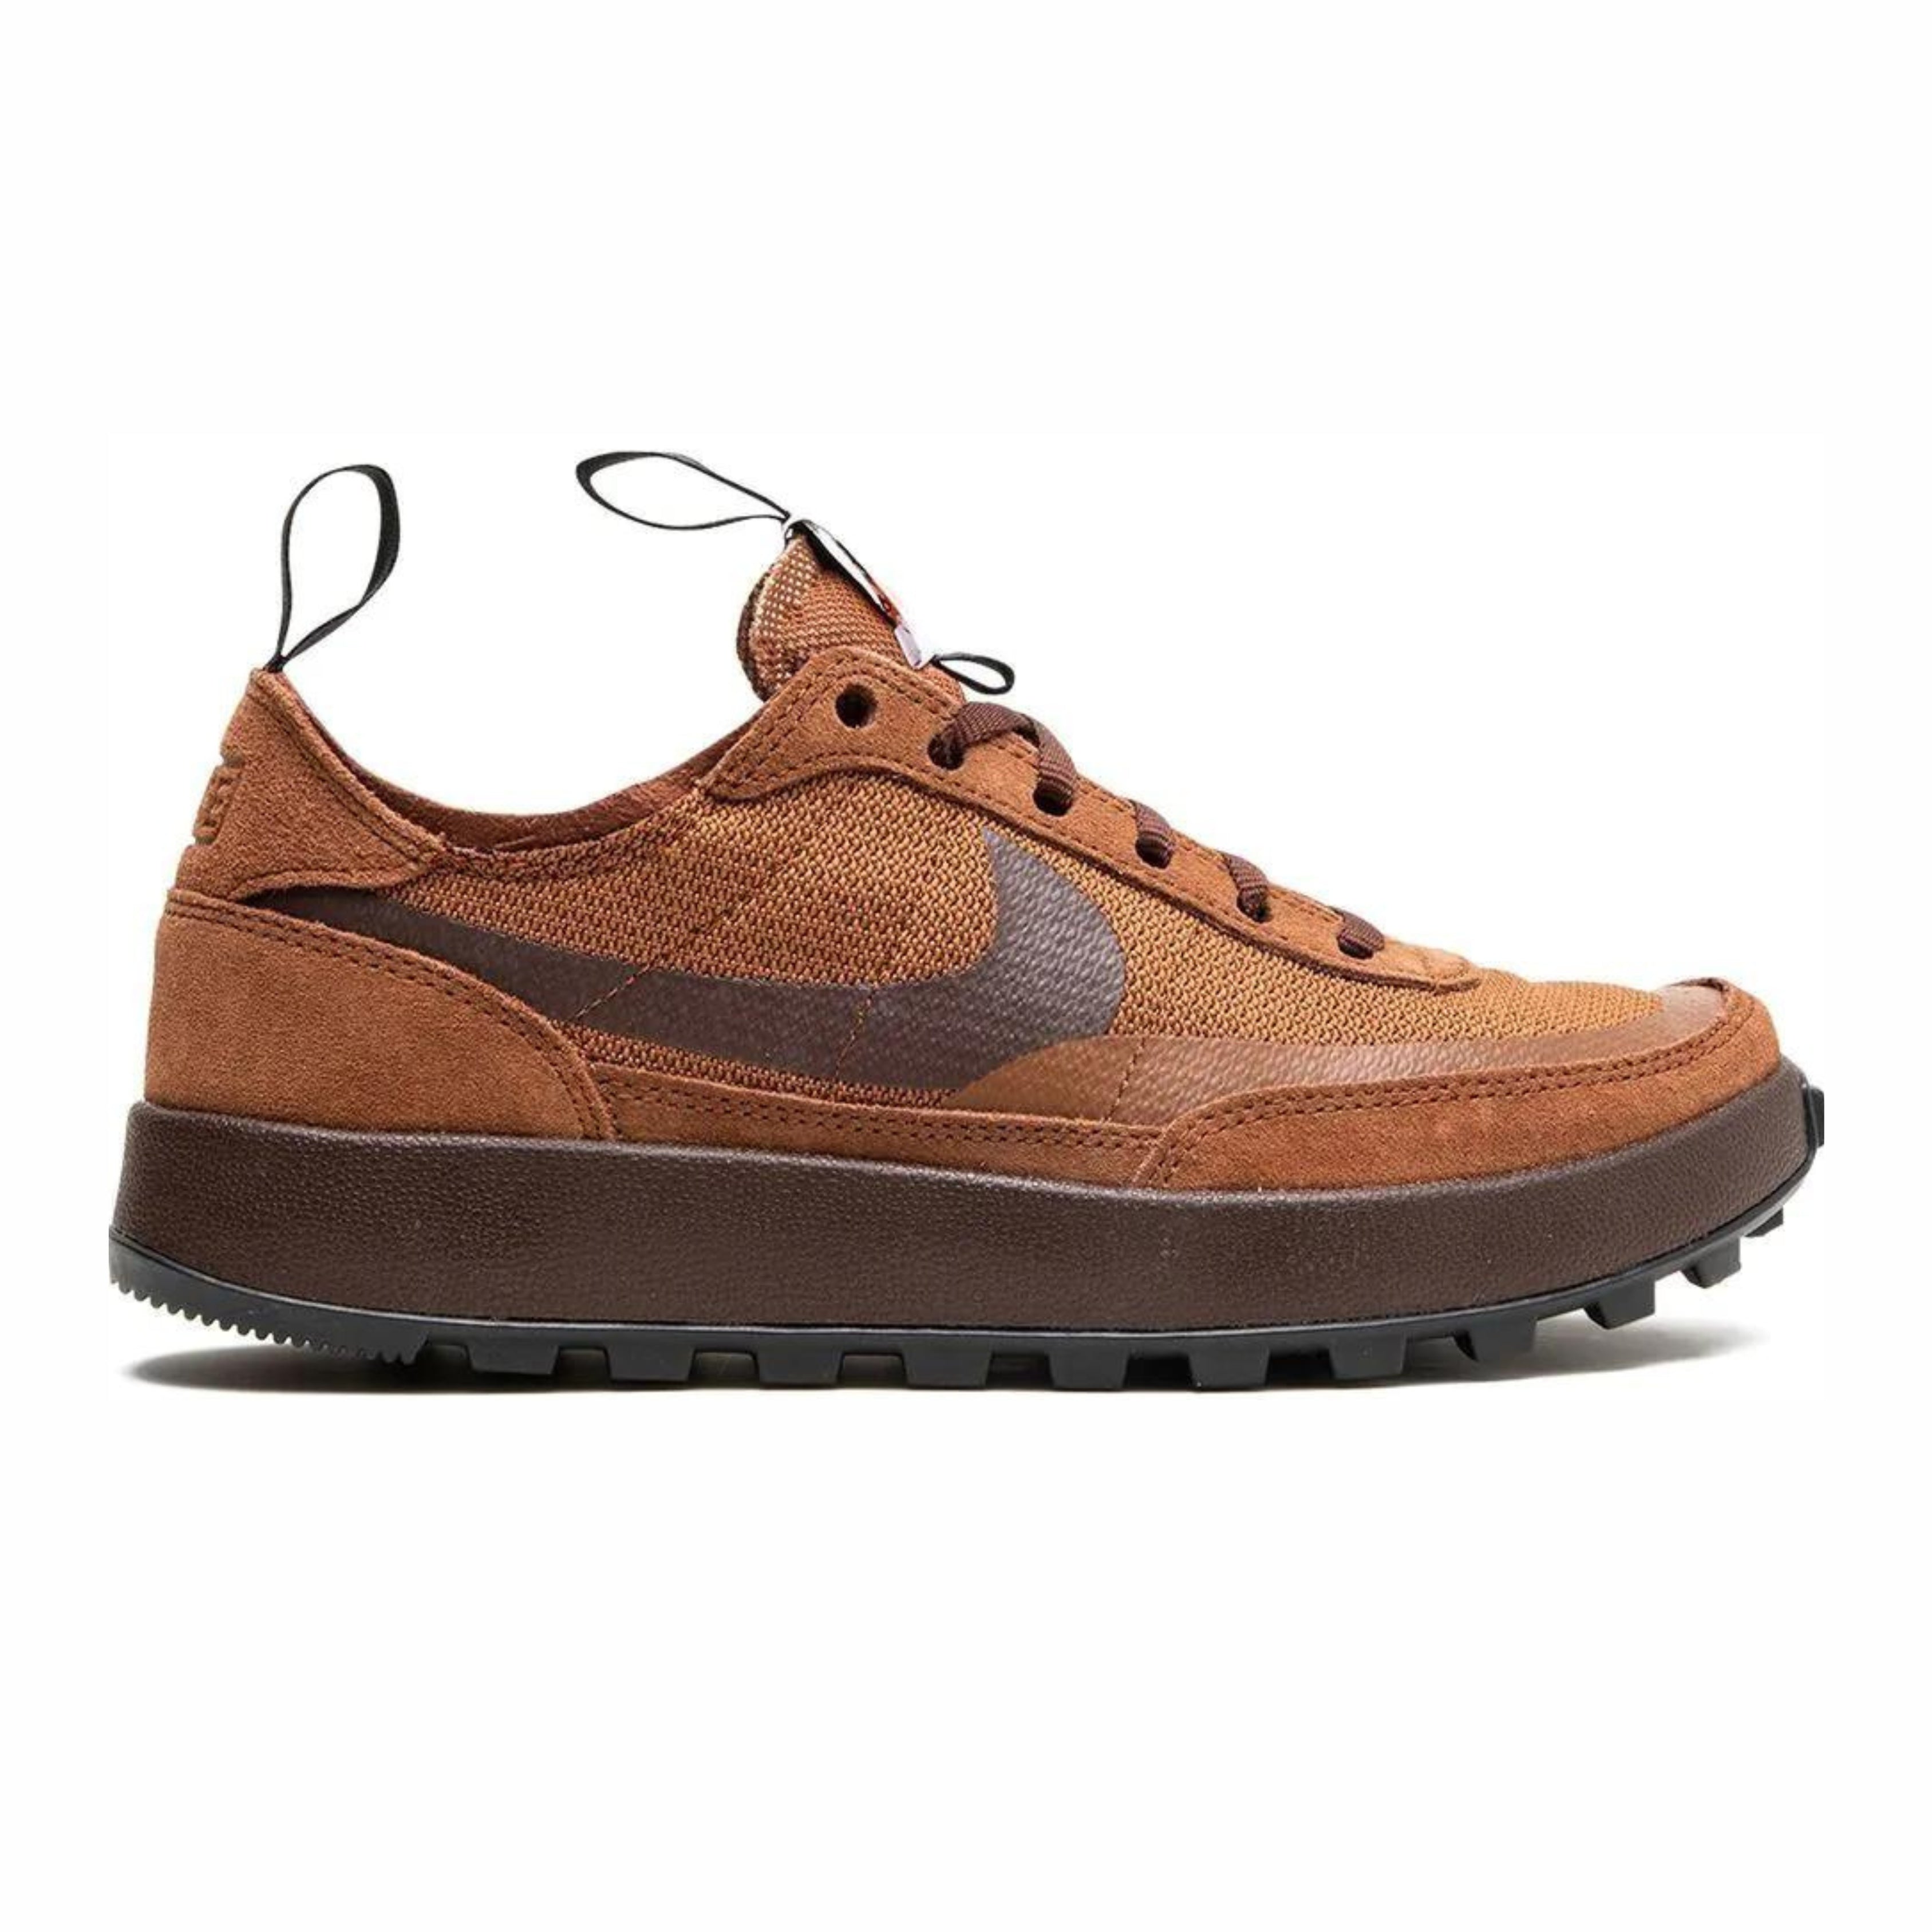 Nike Craft General Purpose Shoe Tom Sachs Field Brown